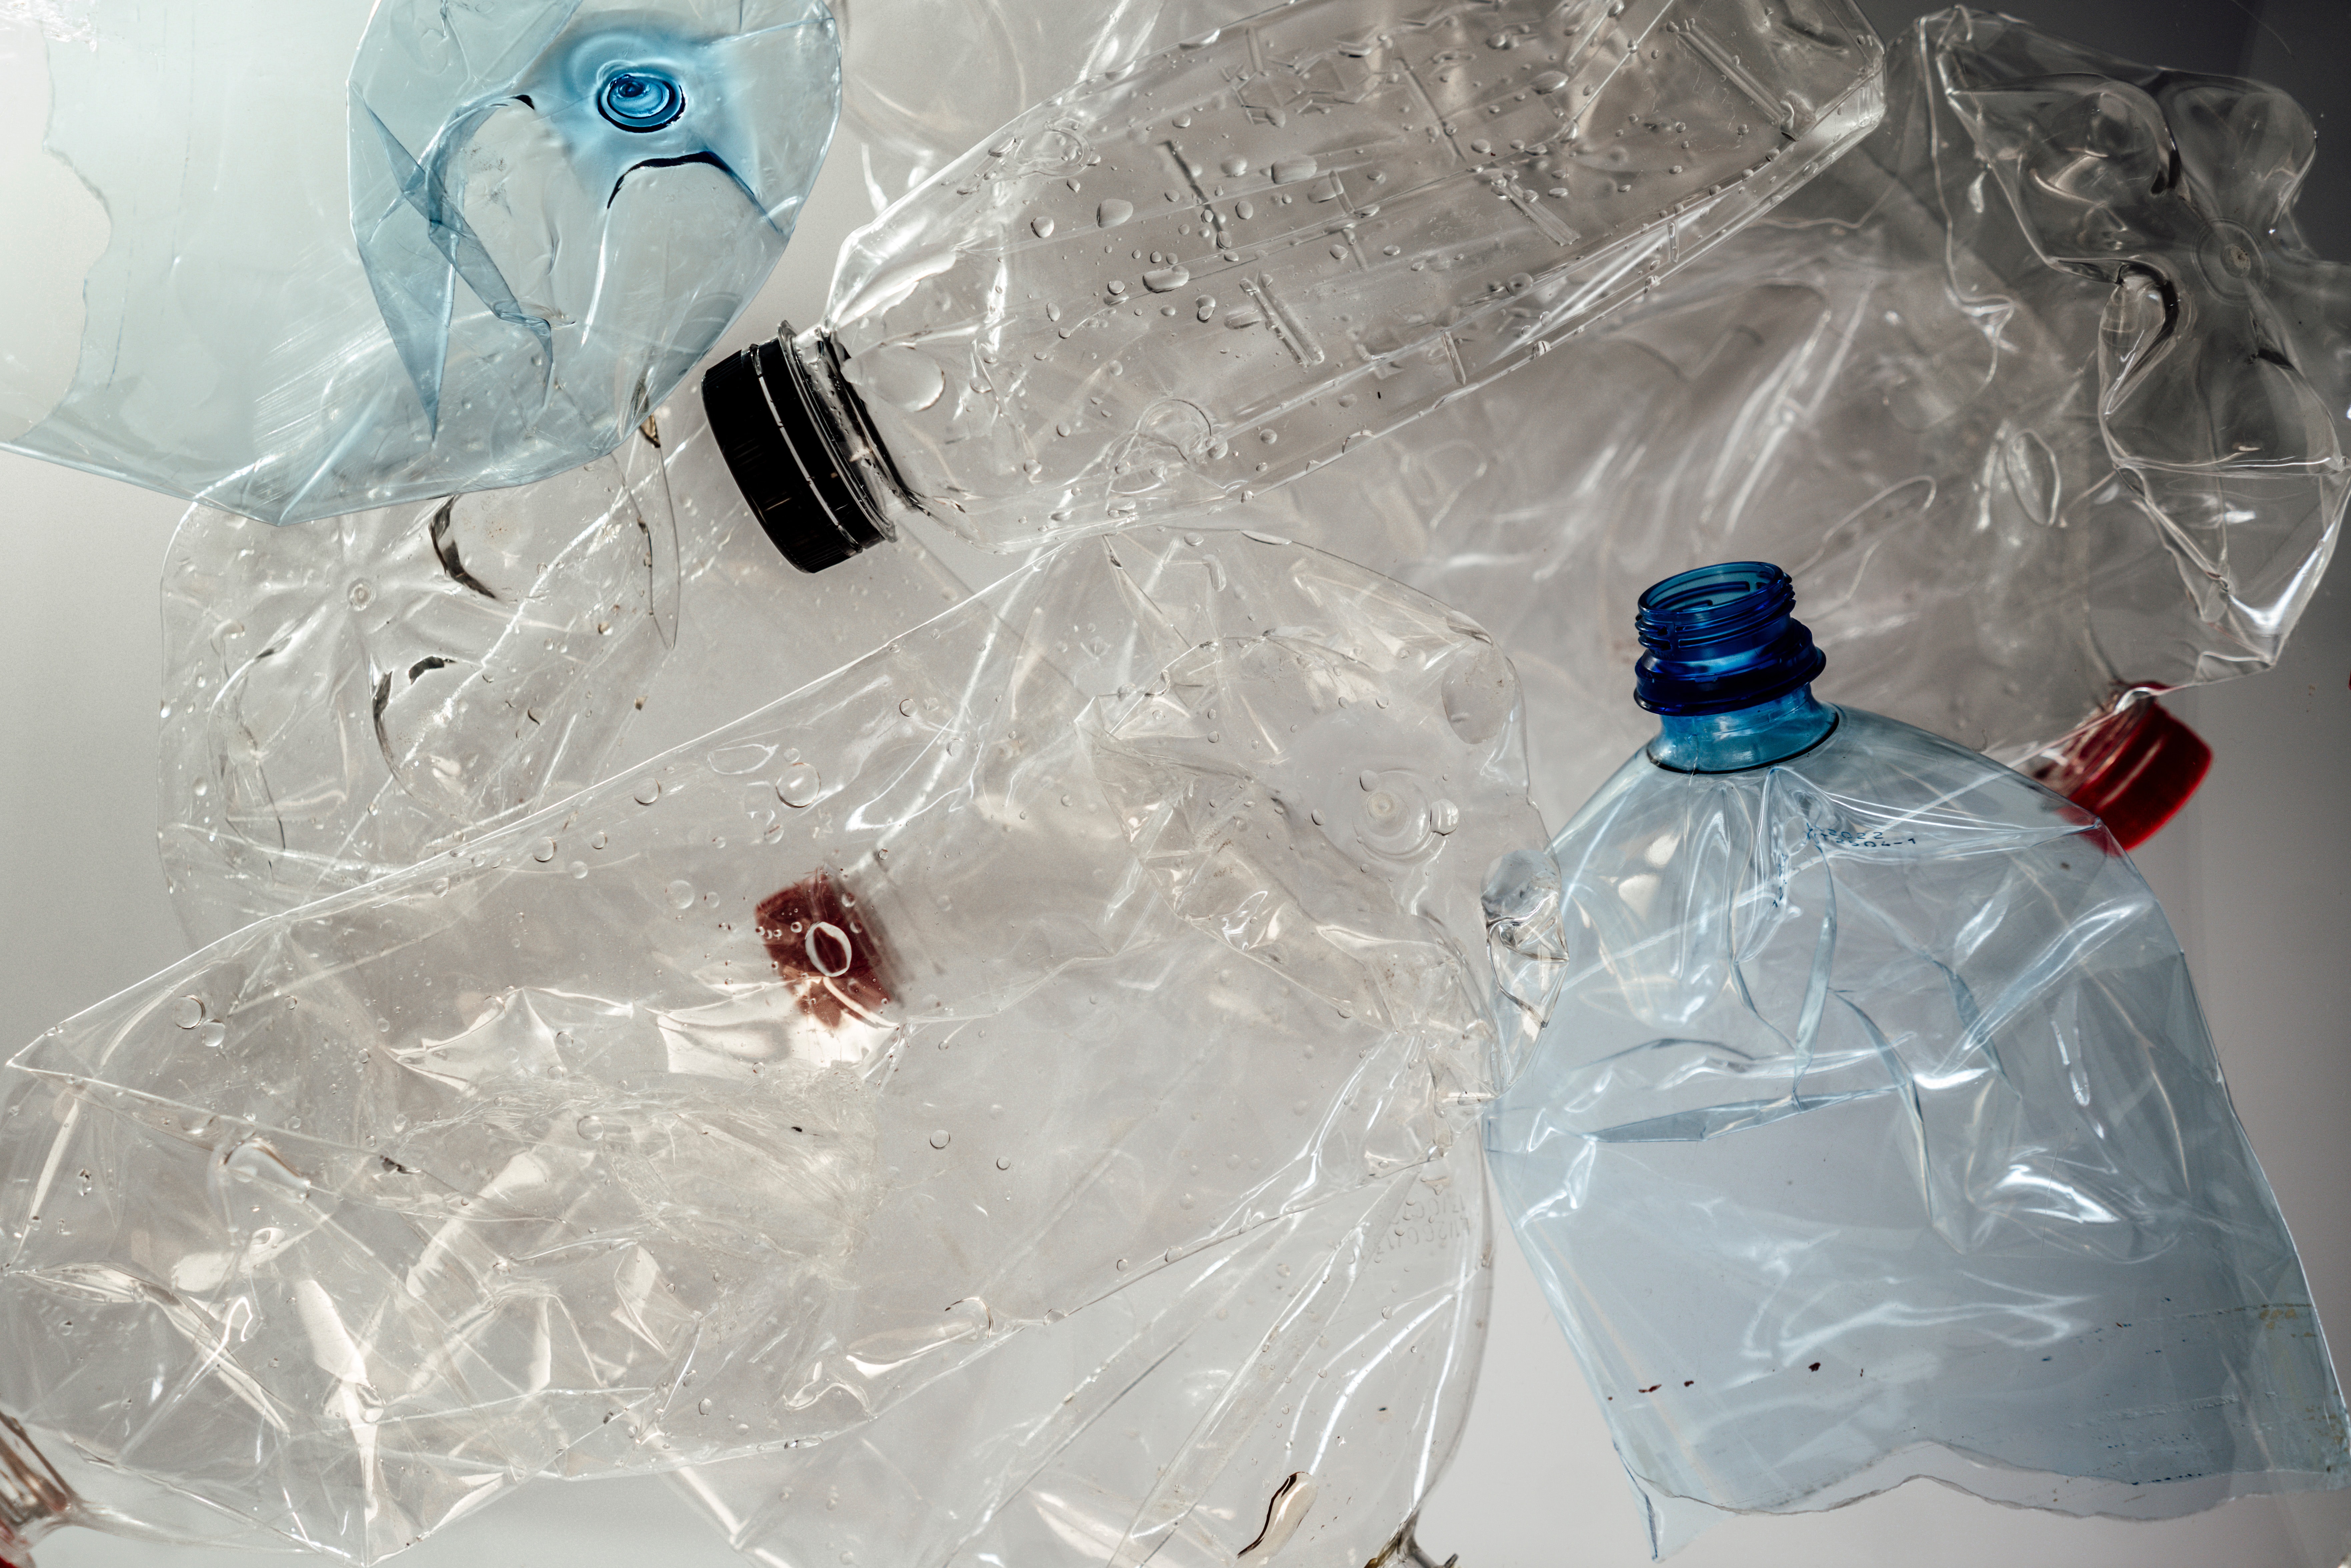 Plastic bottle deposit return scheme finally looks set to start in England